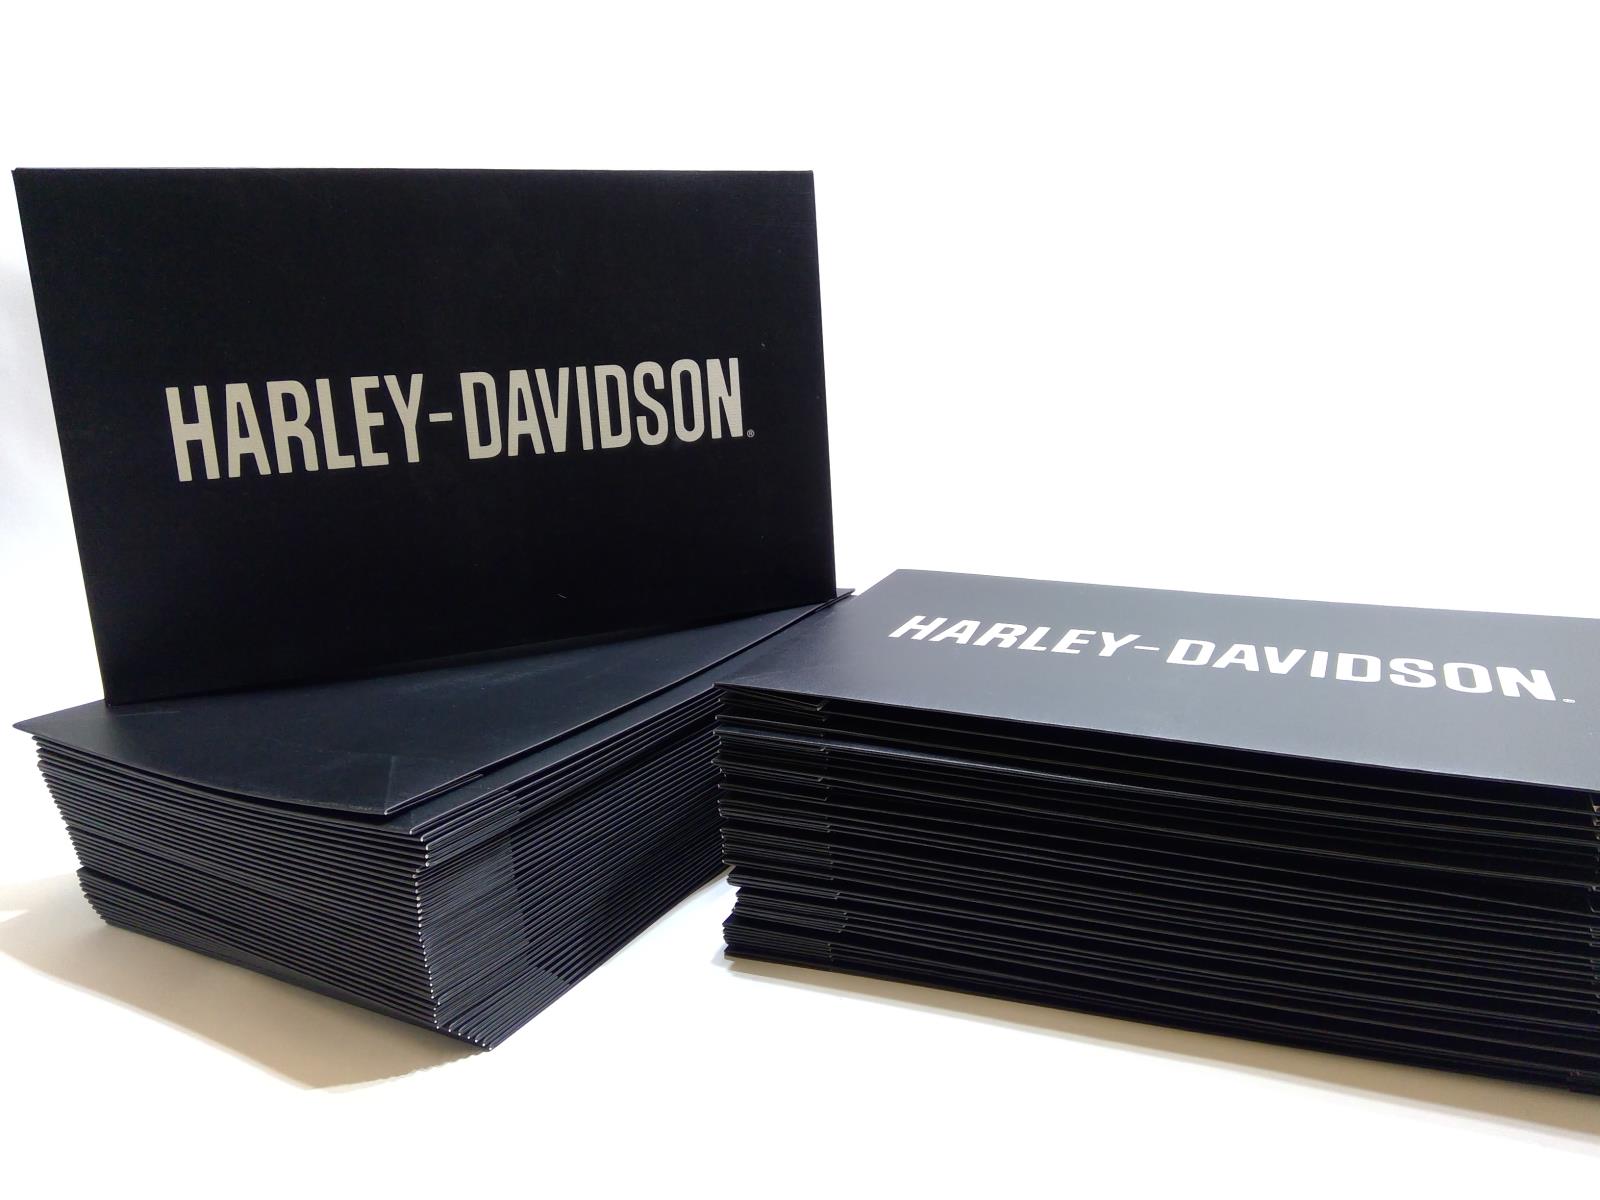 NEW Harley-Davidson Large 15x9.5x2 Black Gift Box 38pk 99611-13V